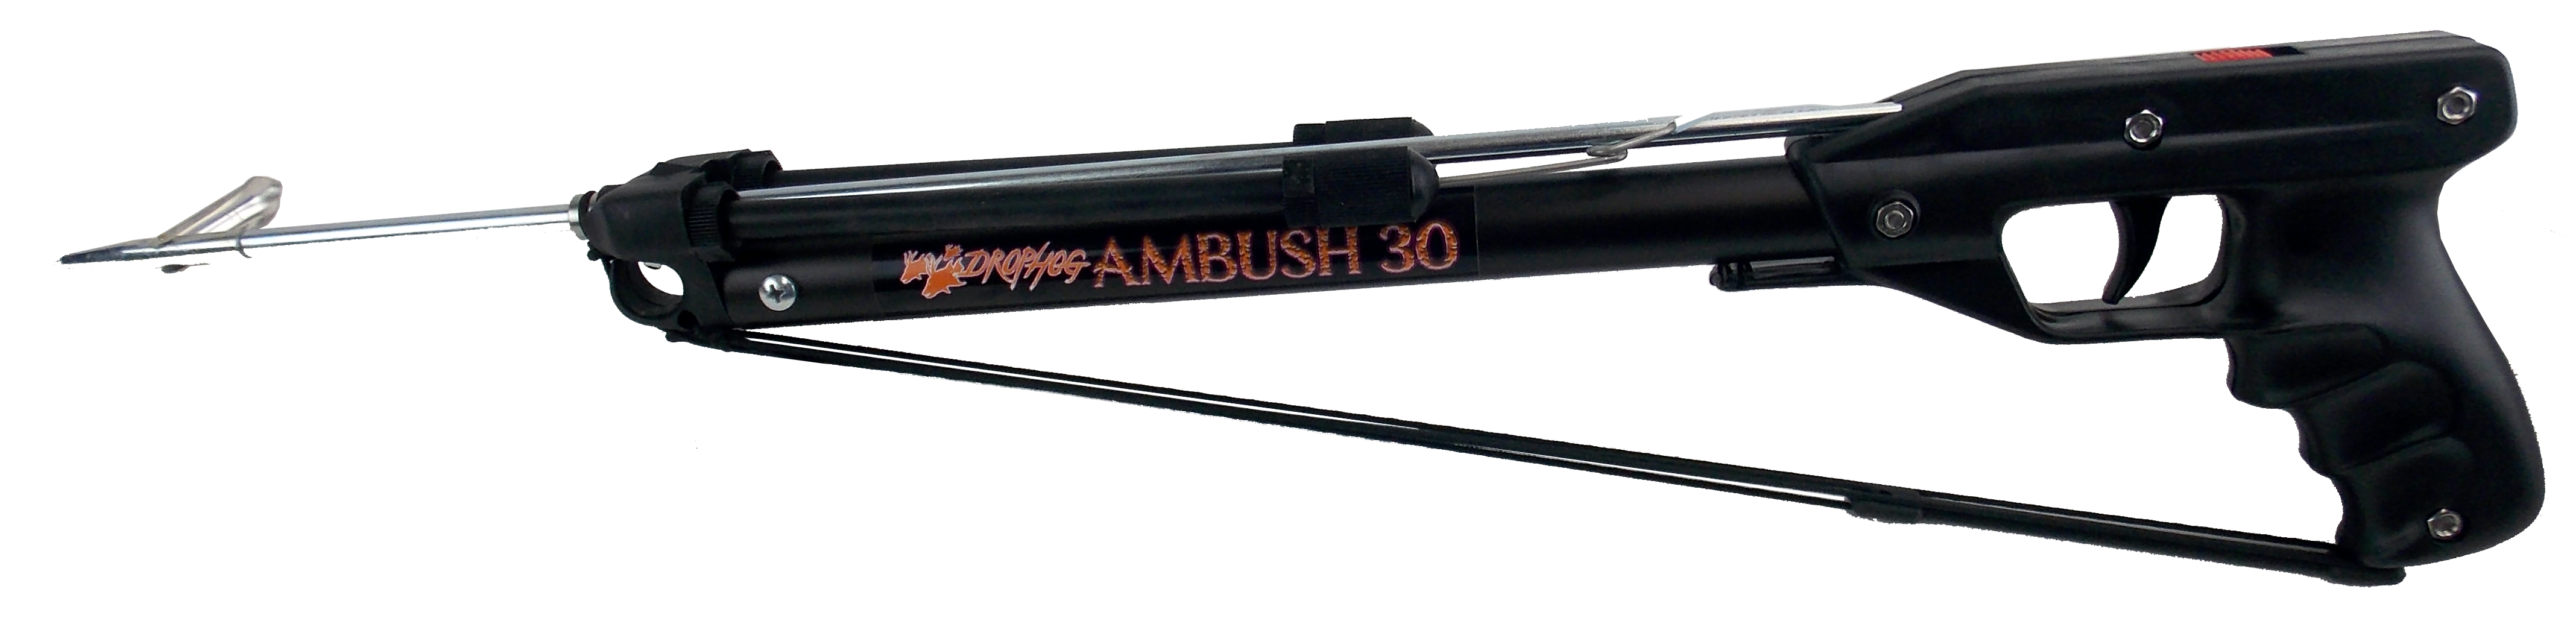 Drophog™ Spearfishing Ambush 30 Series - Micro Speargun –